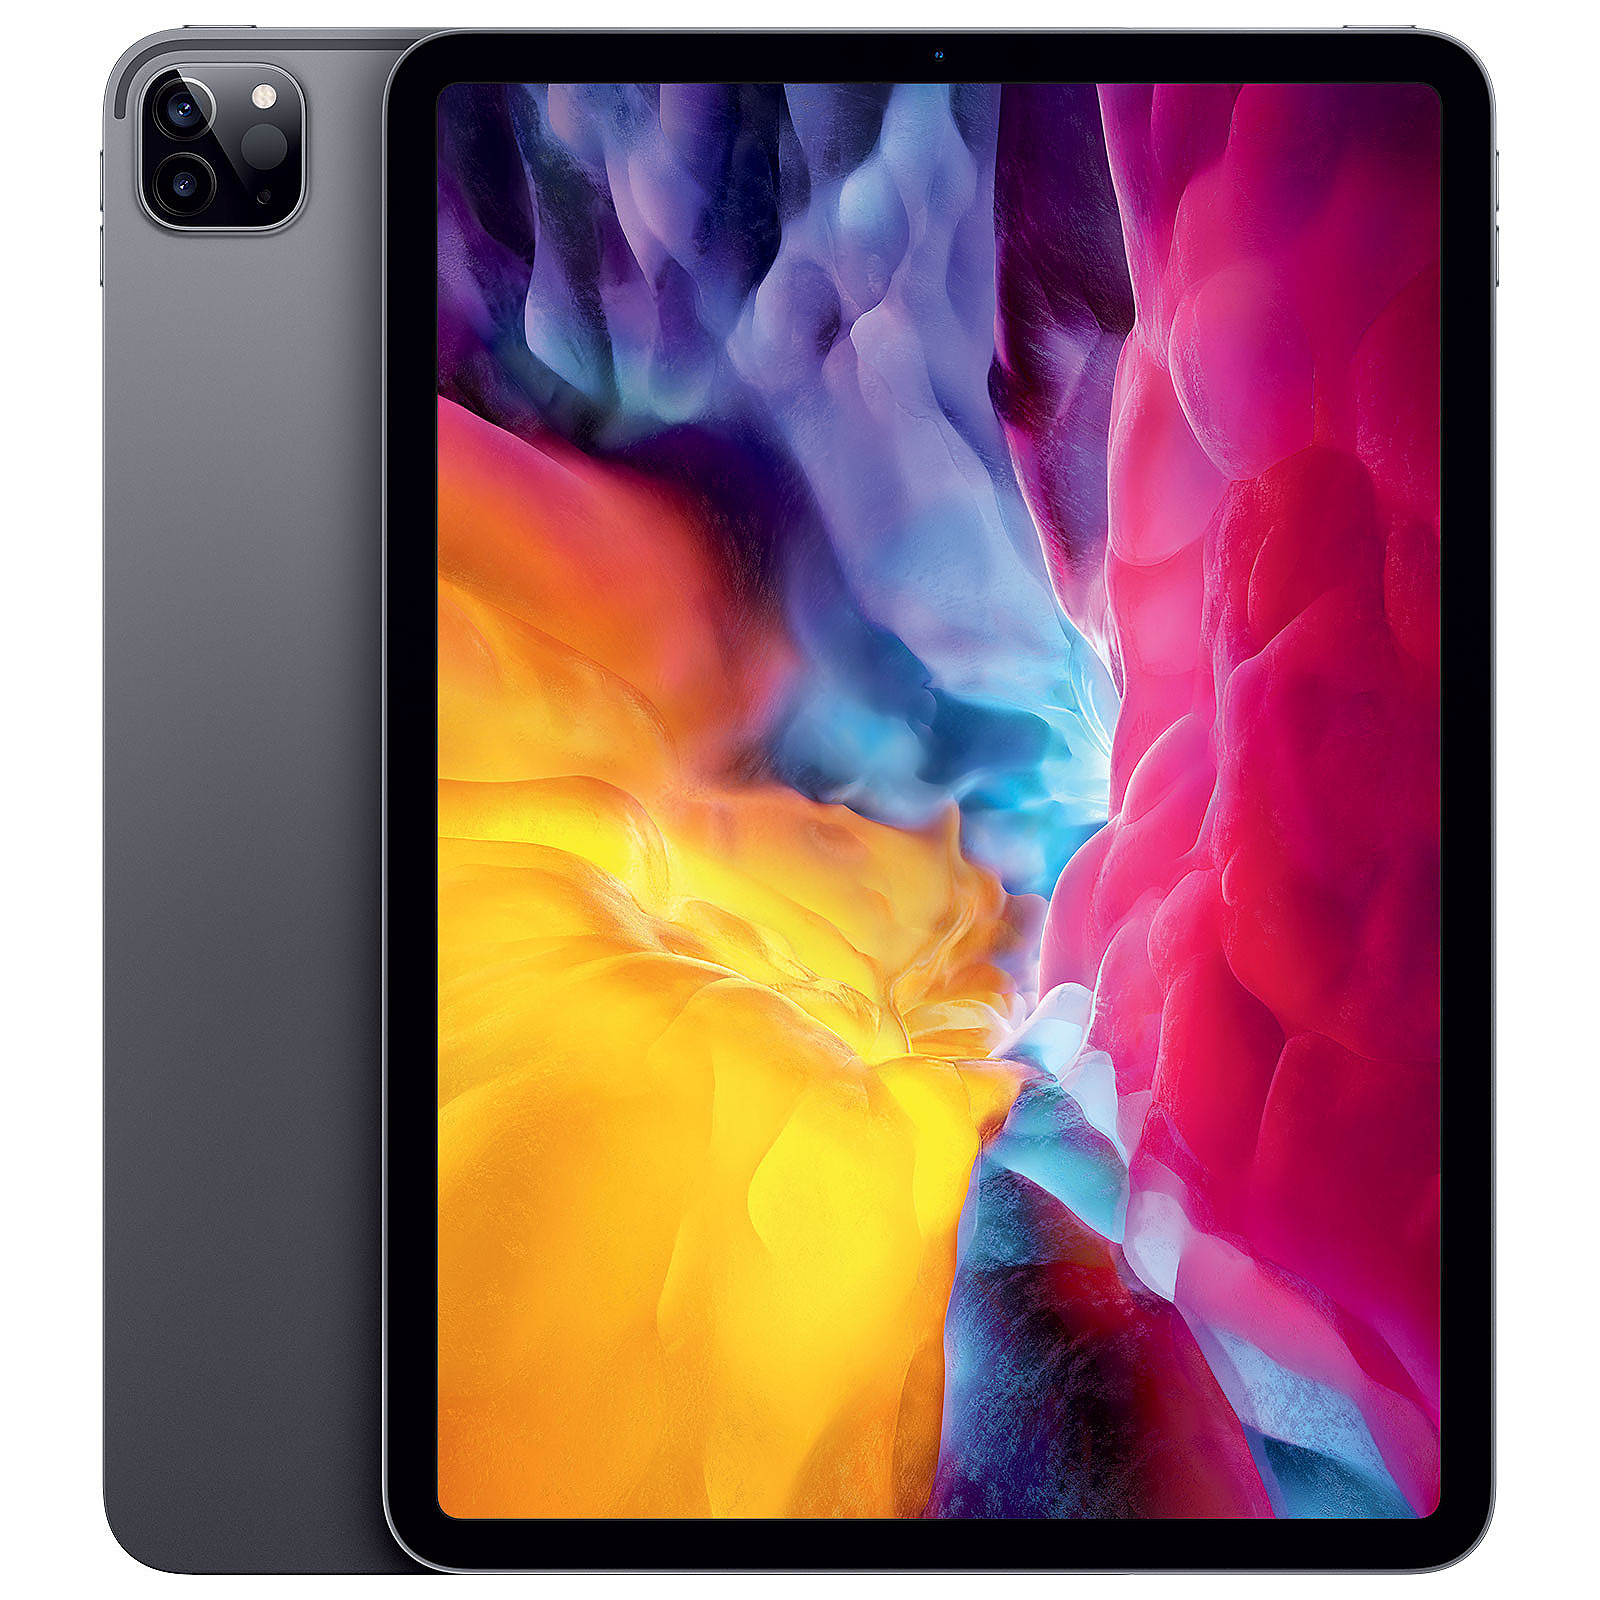 Apple iPad Pro (2020) 11 pouces 128 Go Wi-Fi Gris Sideral - Tablette tactile Apple